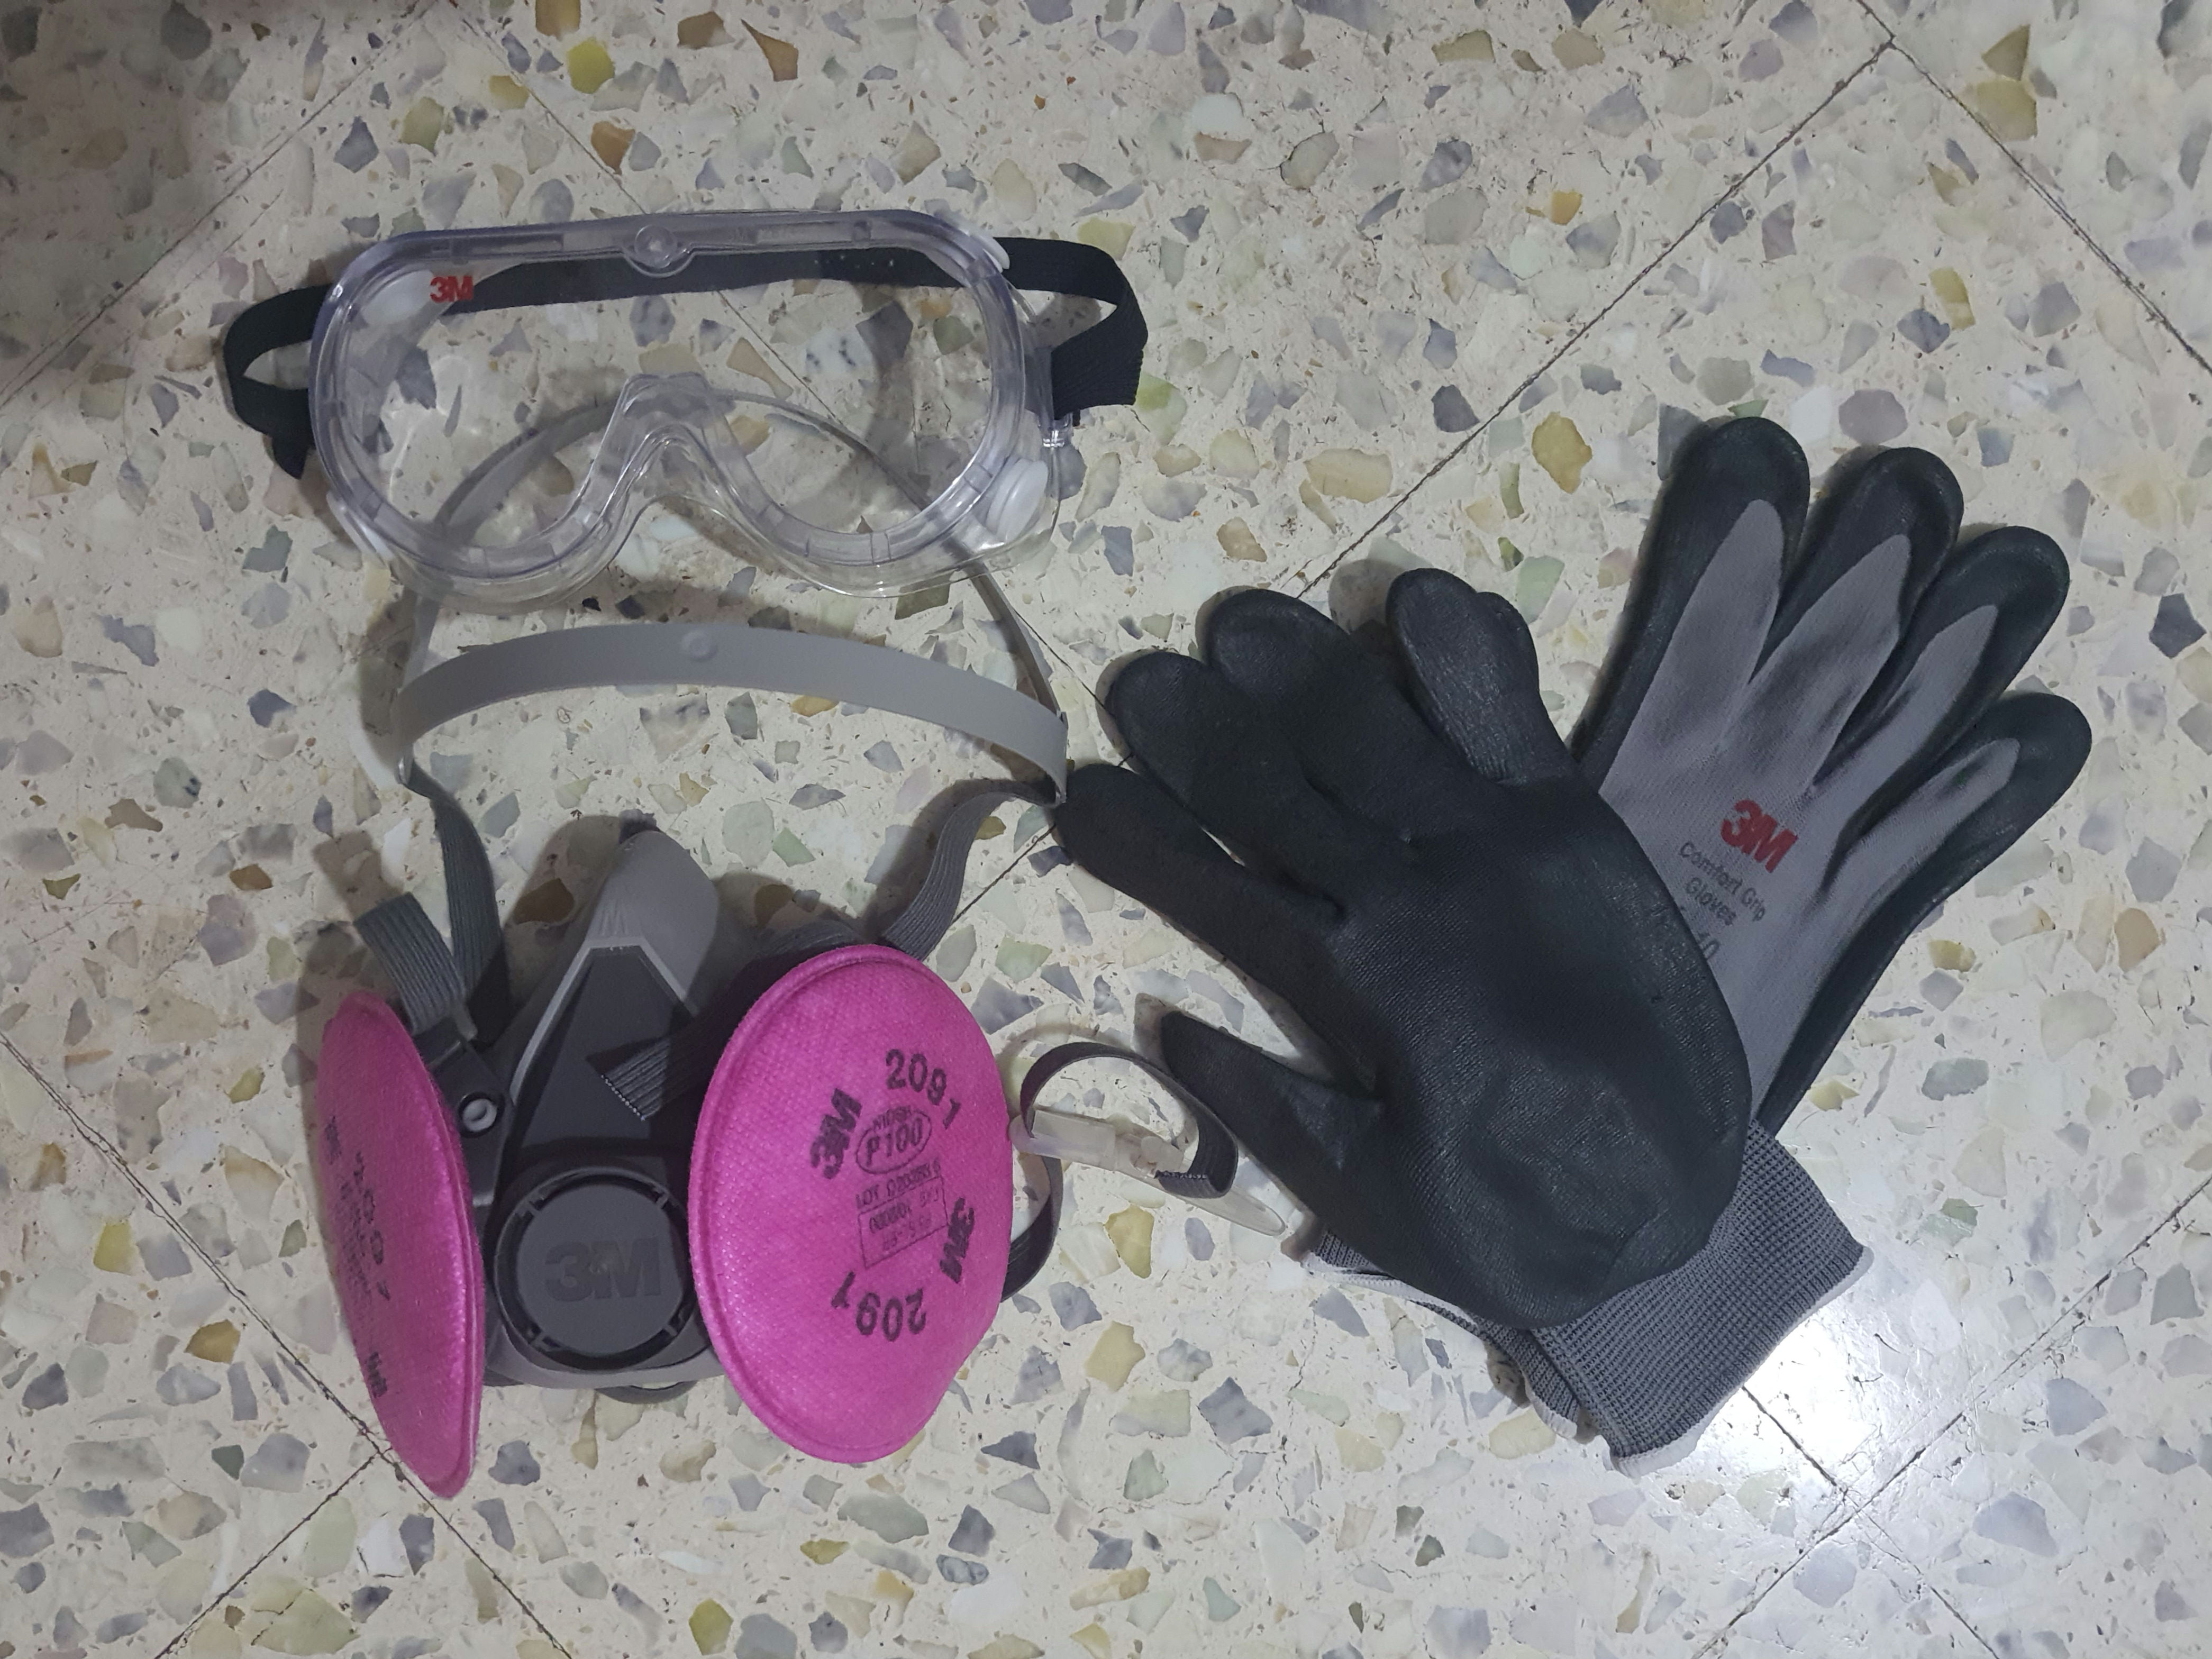 My PPE set